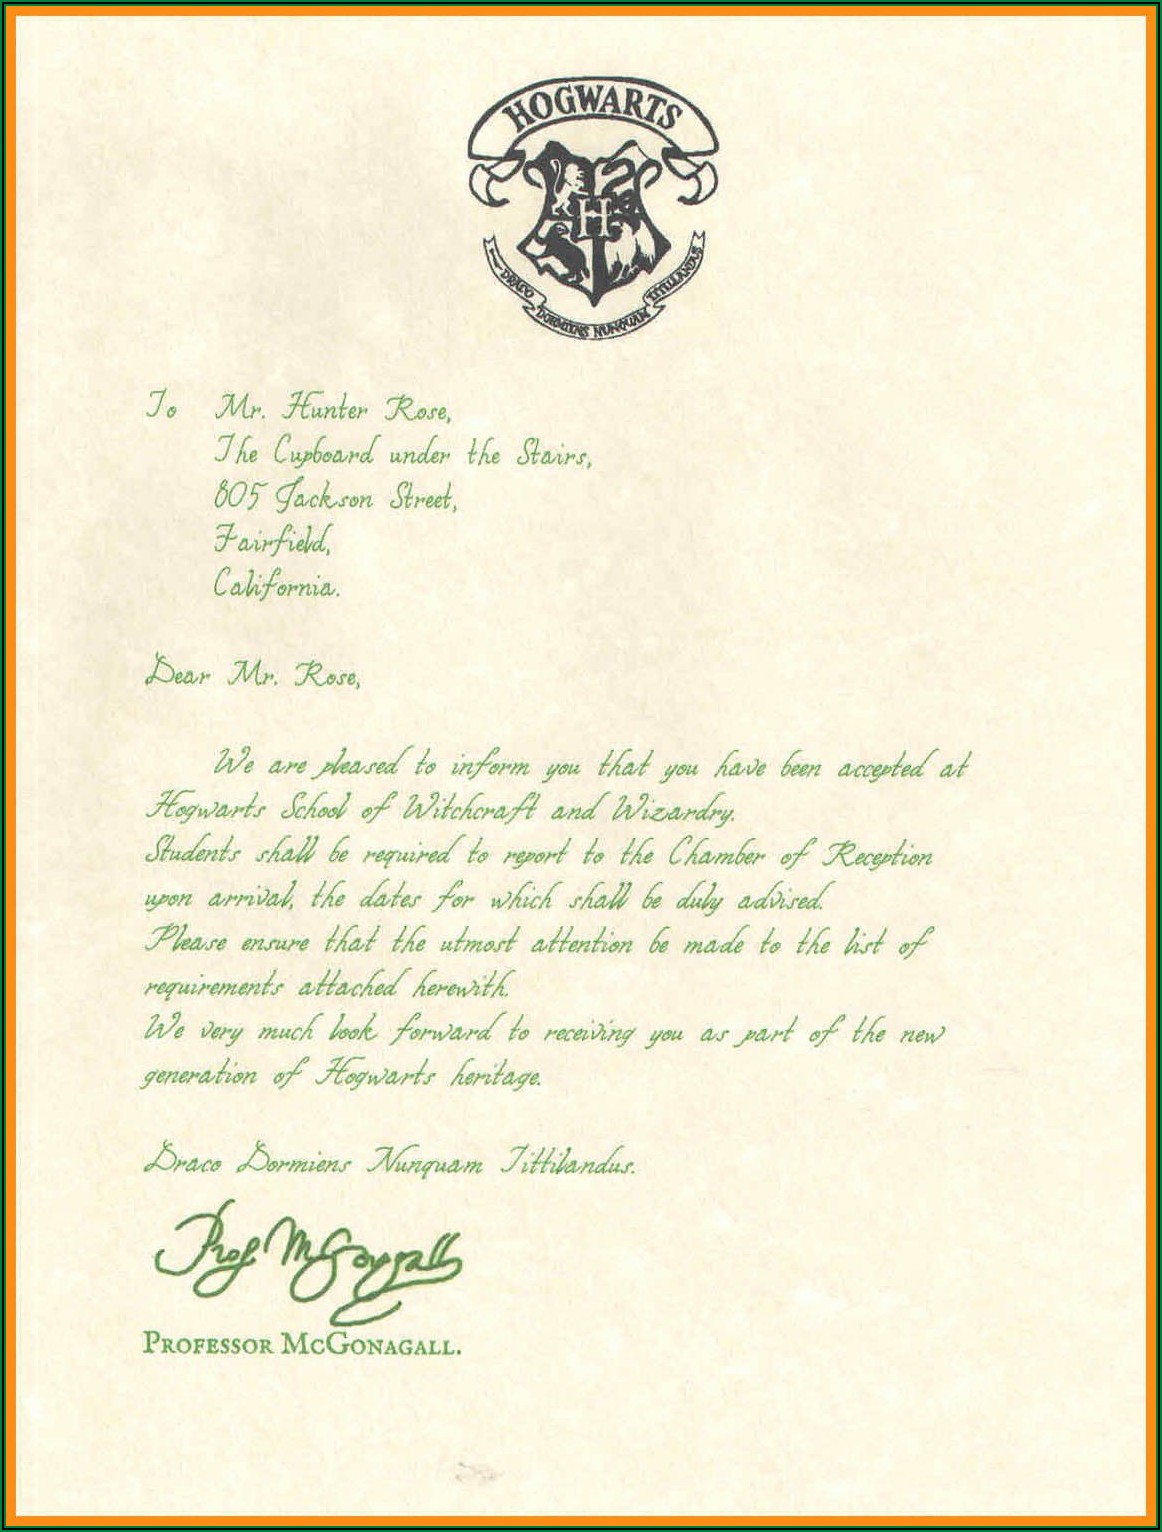 Harry Potter Letter Template Pdf